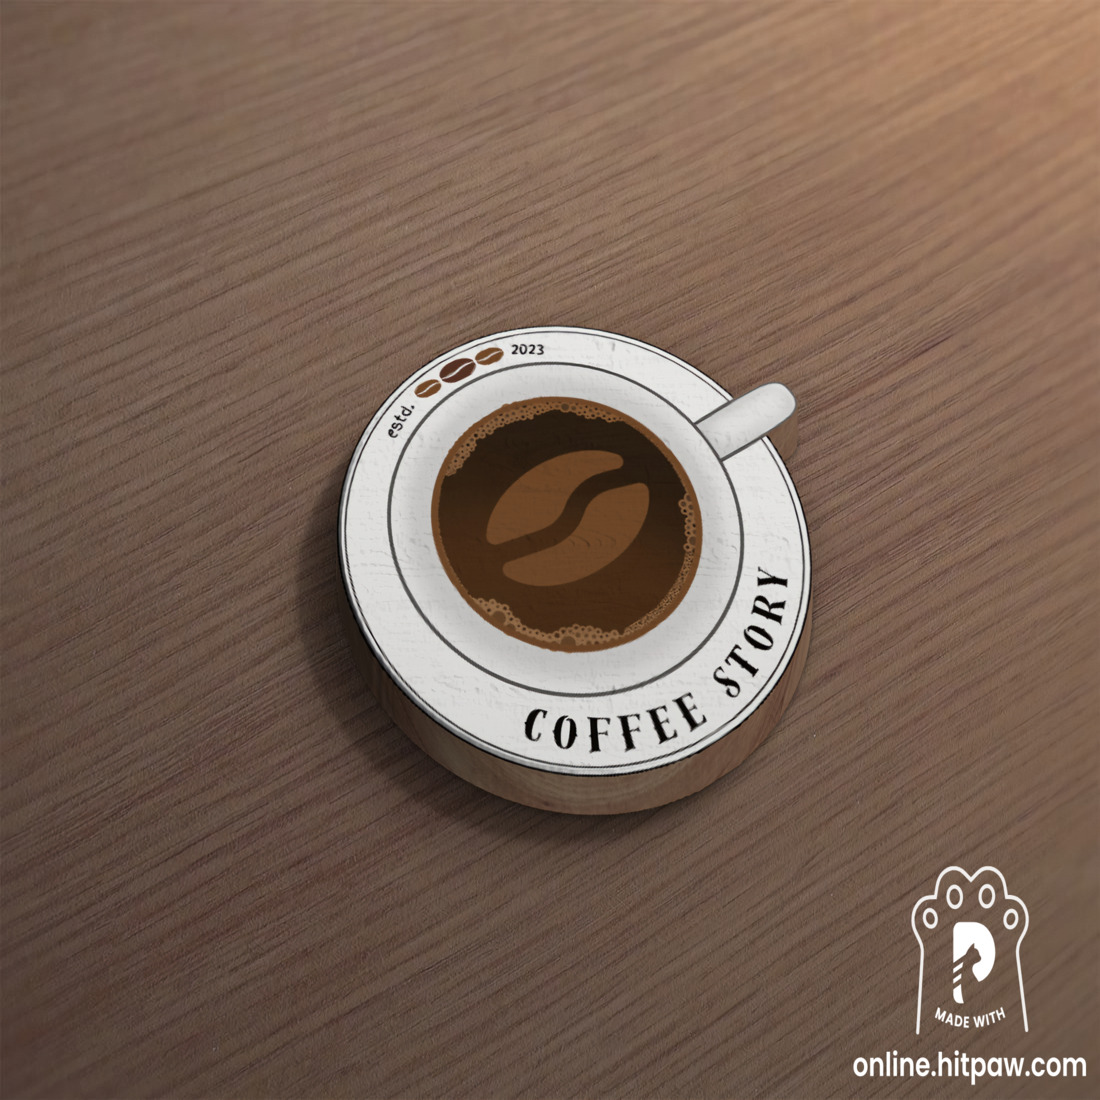 Logo coffee, distinctive coffee preview image.